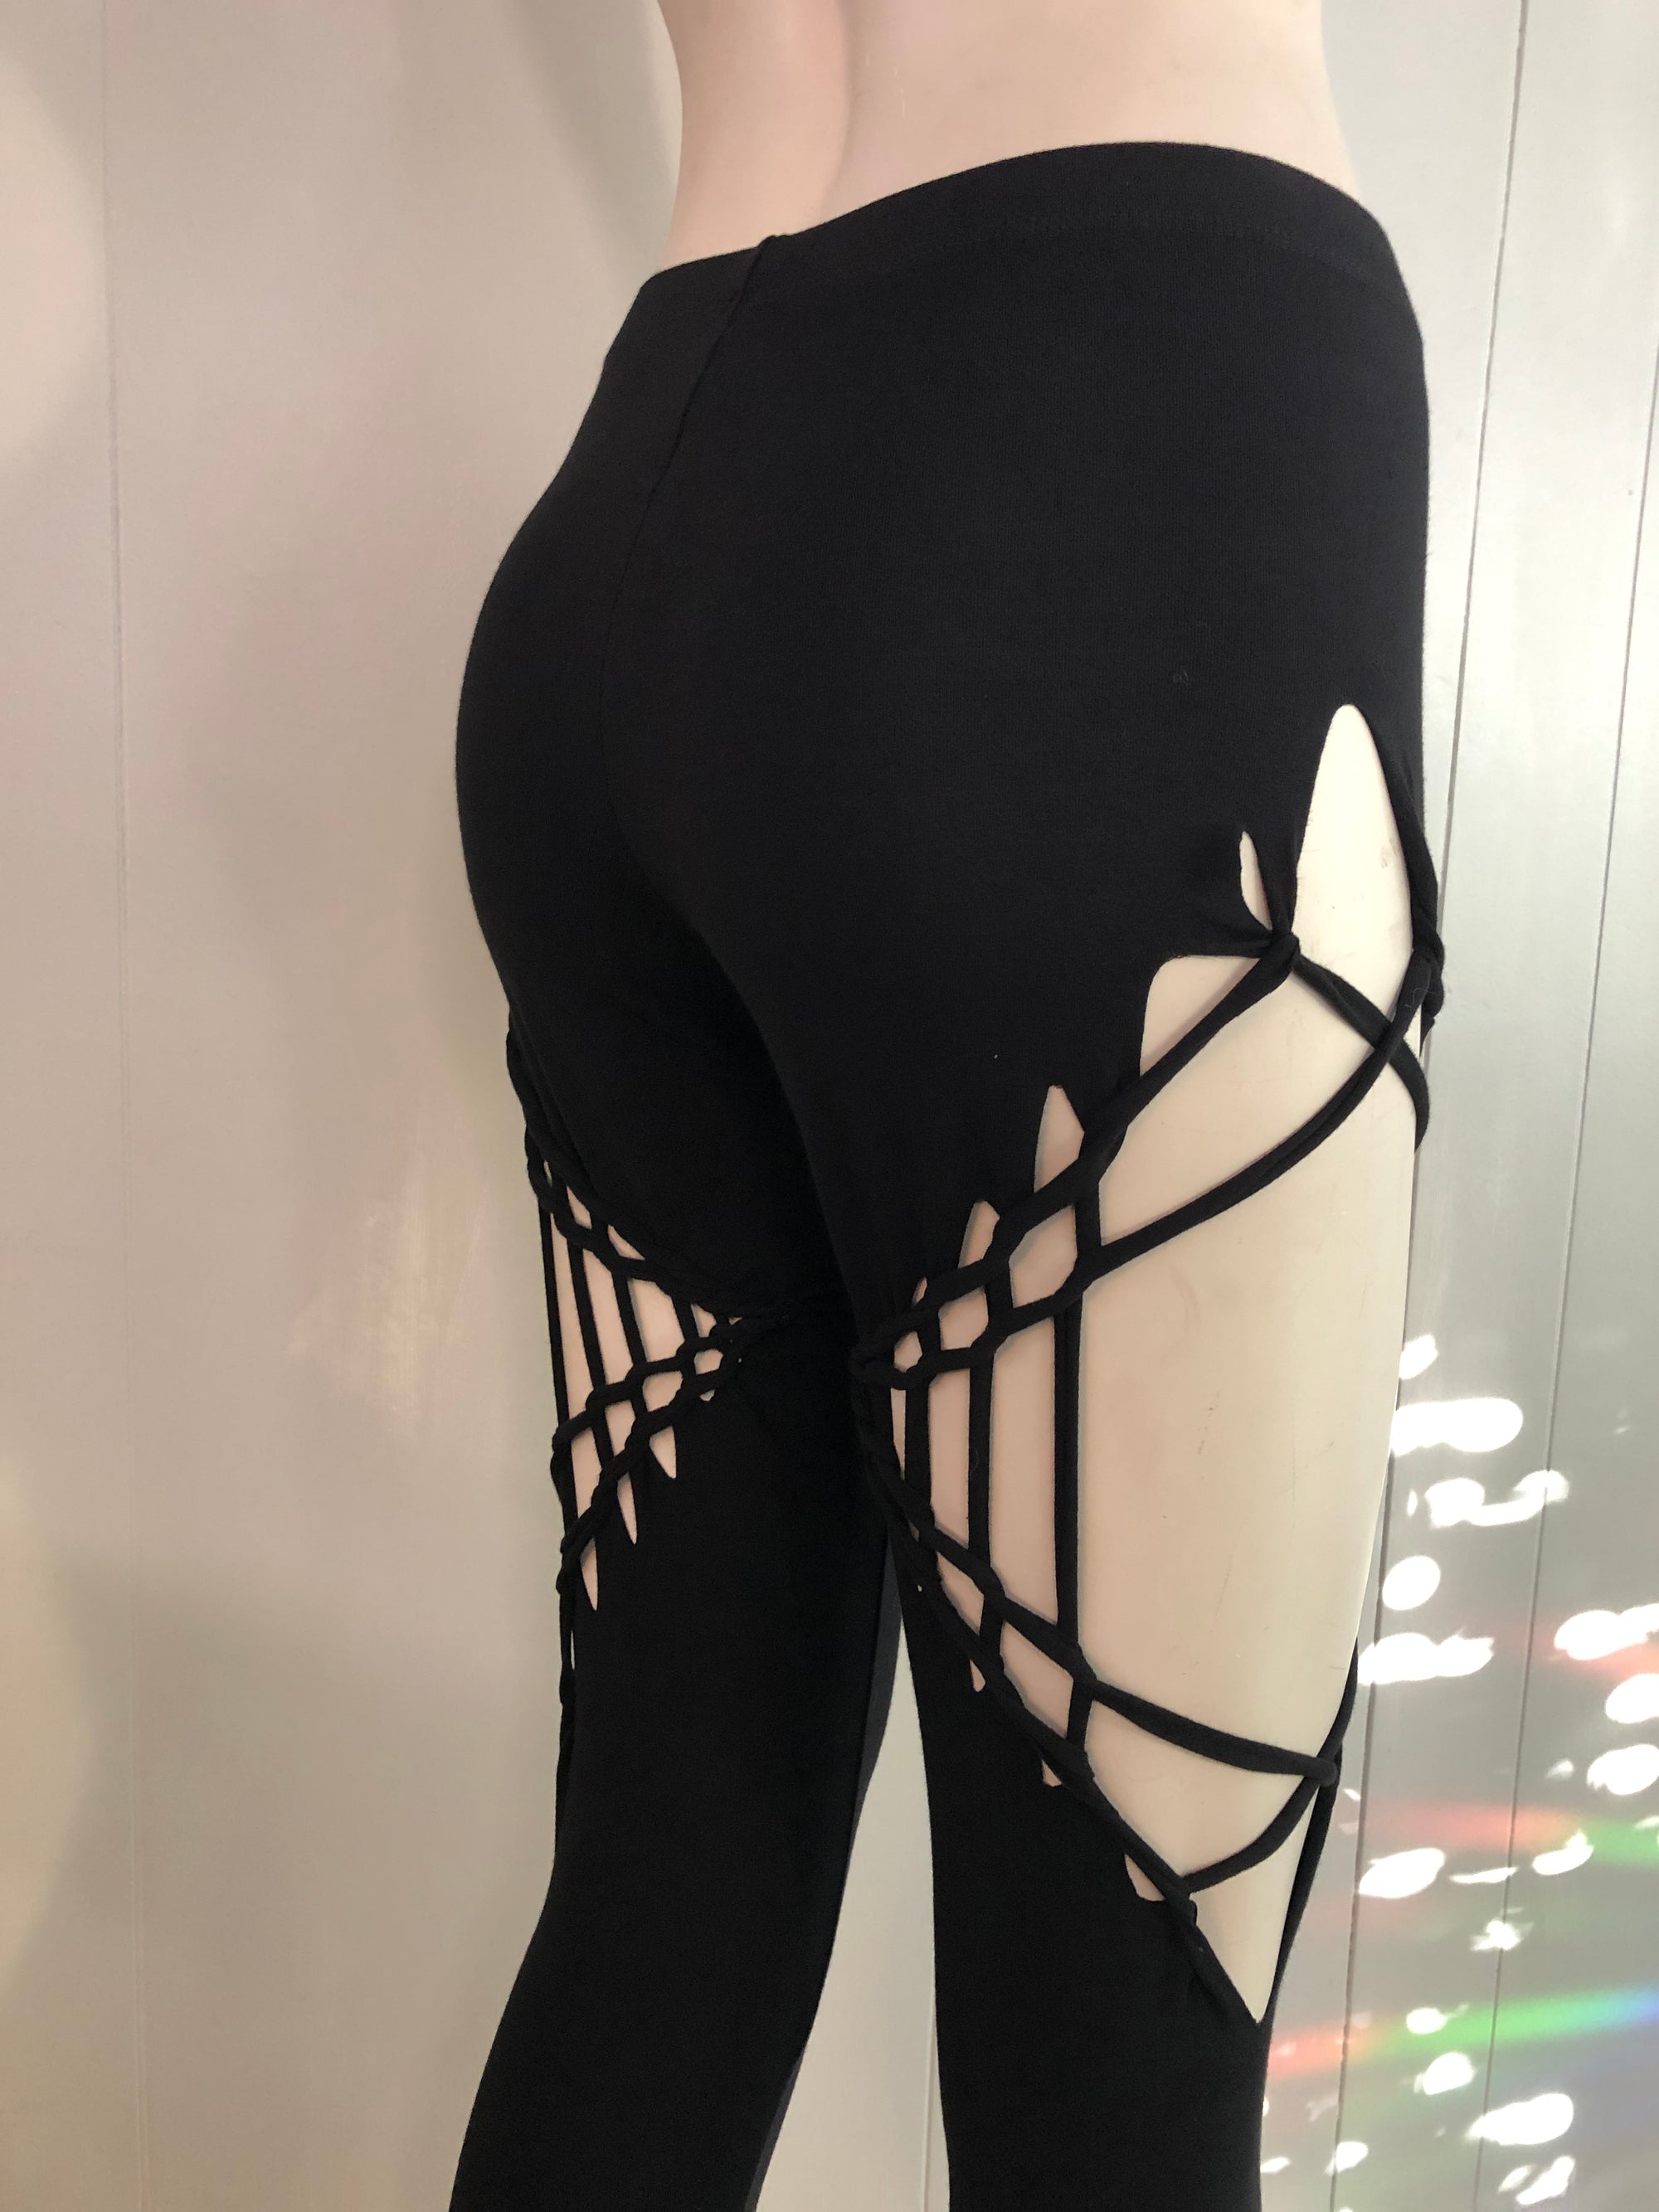 Slit Weave - This new crosshatch legging design just